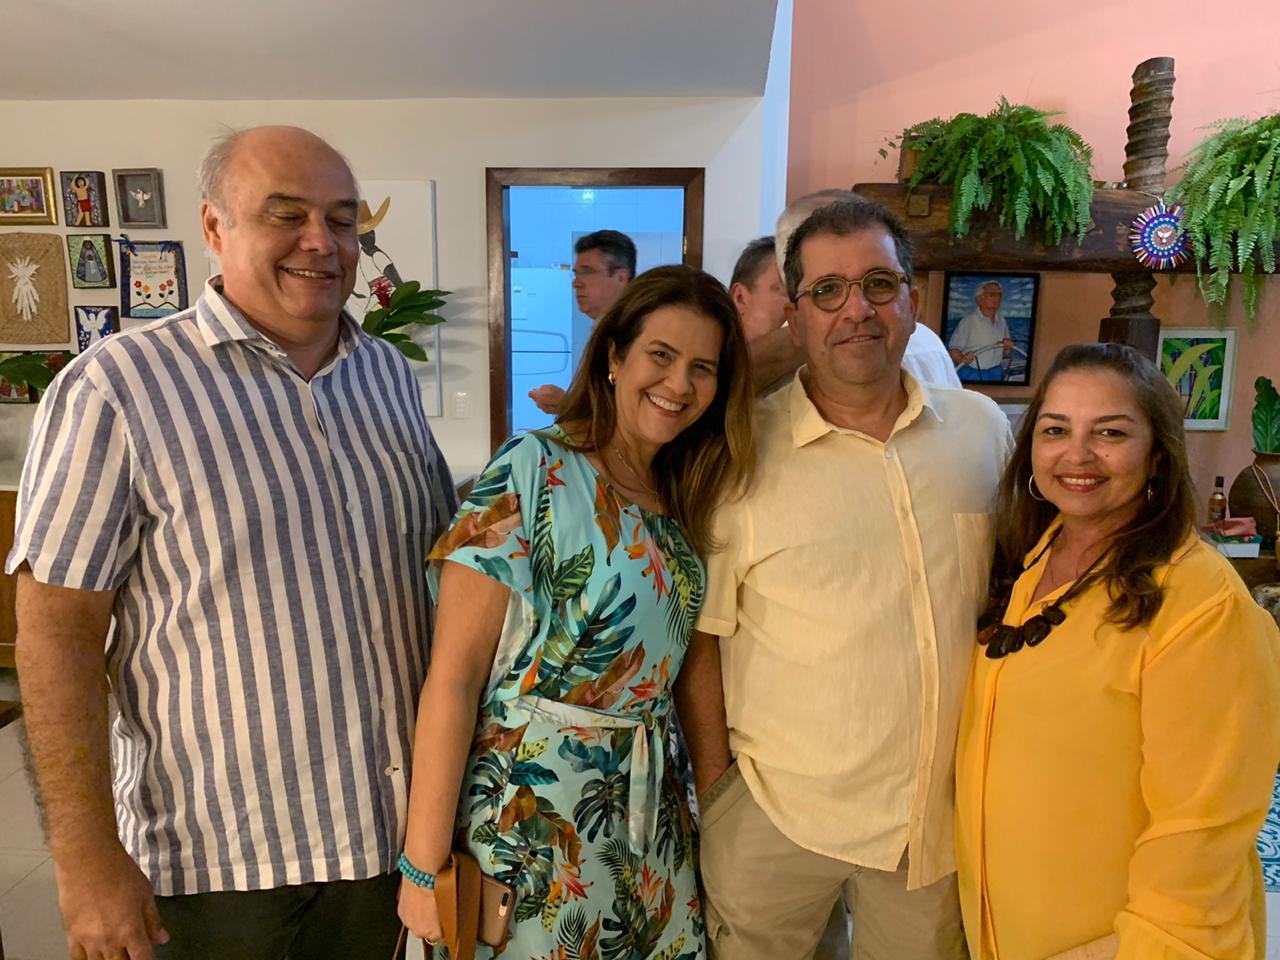 Newton e Márcia Coelho, e o marido Gustavo em coro de felicidades para a querida Mirtinha Bezerra